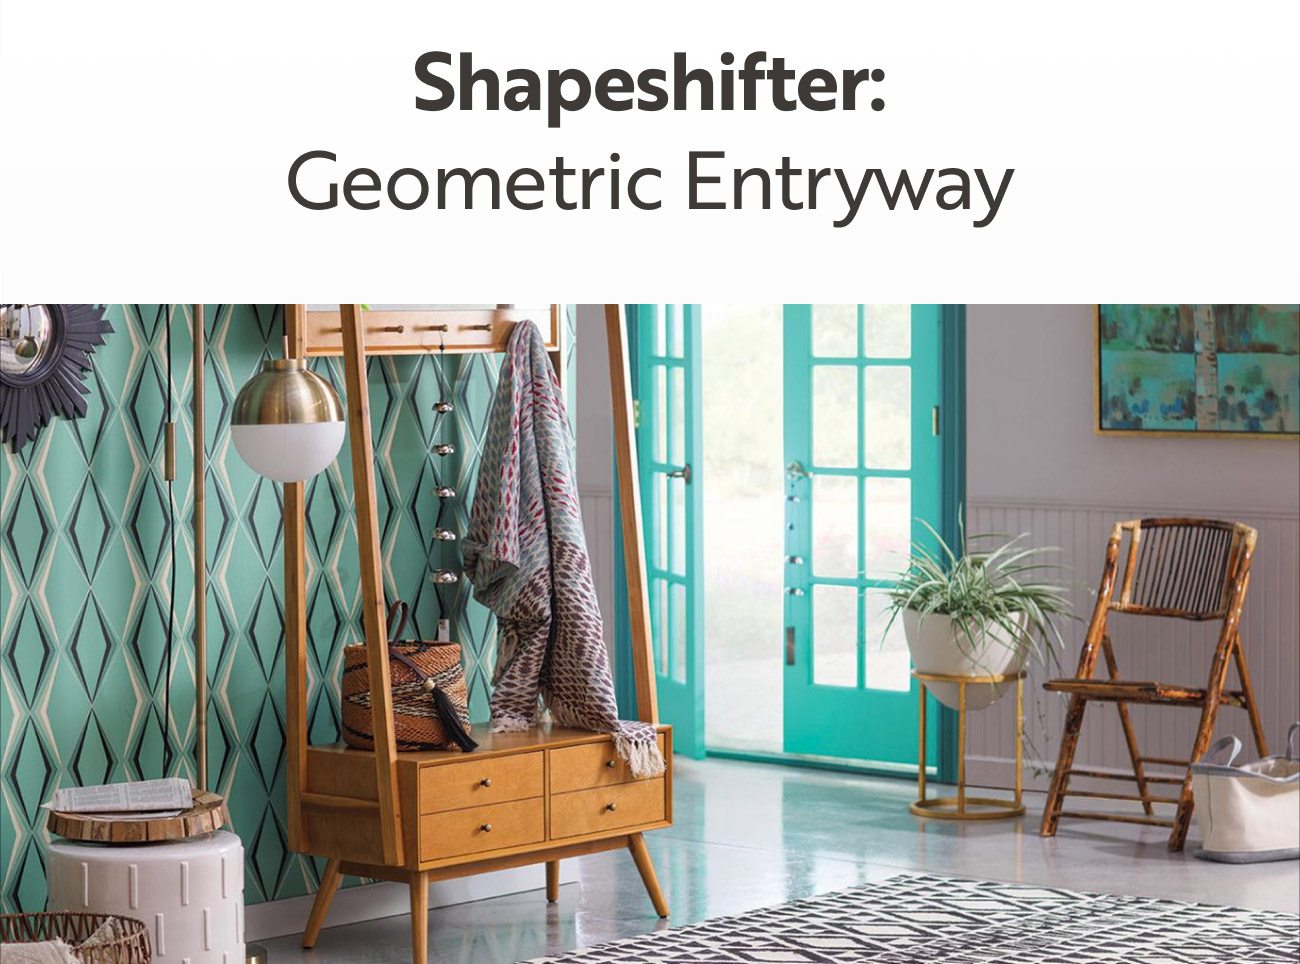 Shapeshifter: Geometric Entryway